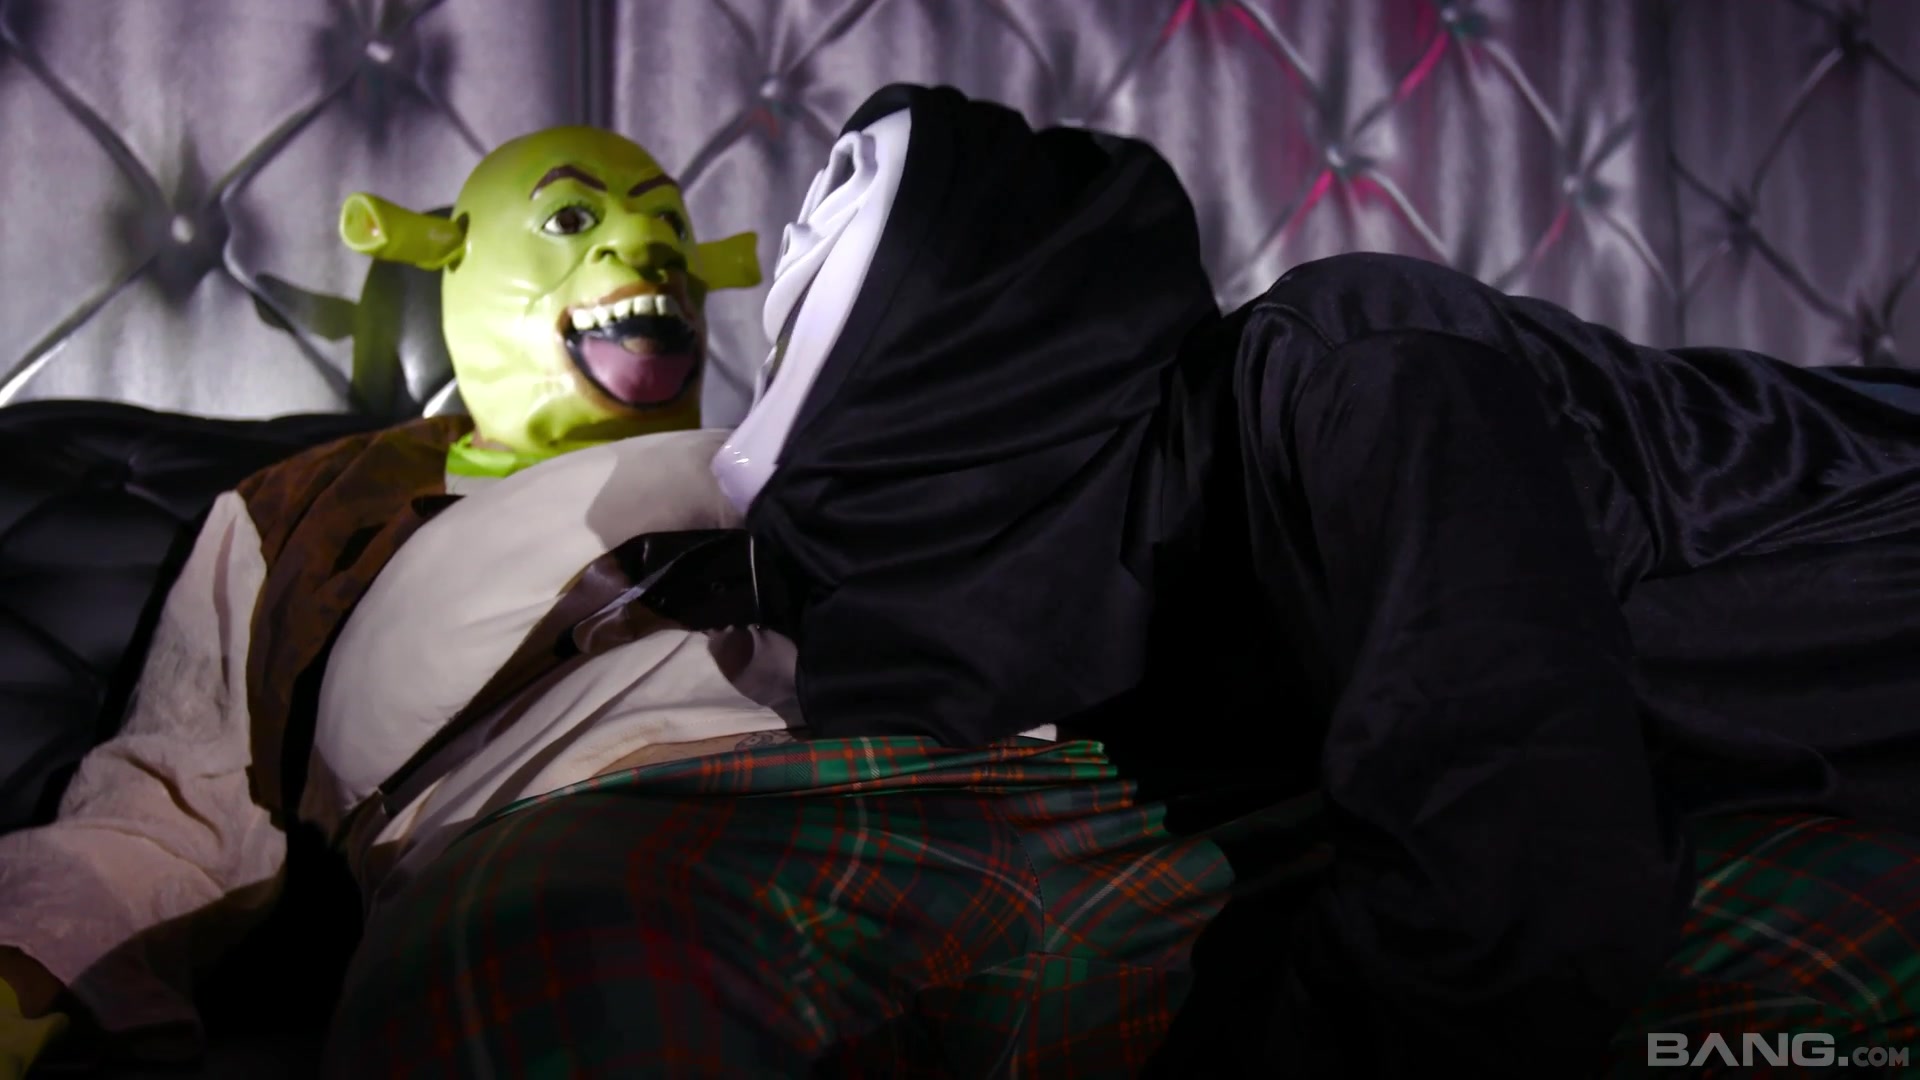 Kinky fetish in dirty Shrek role play - XBabe video